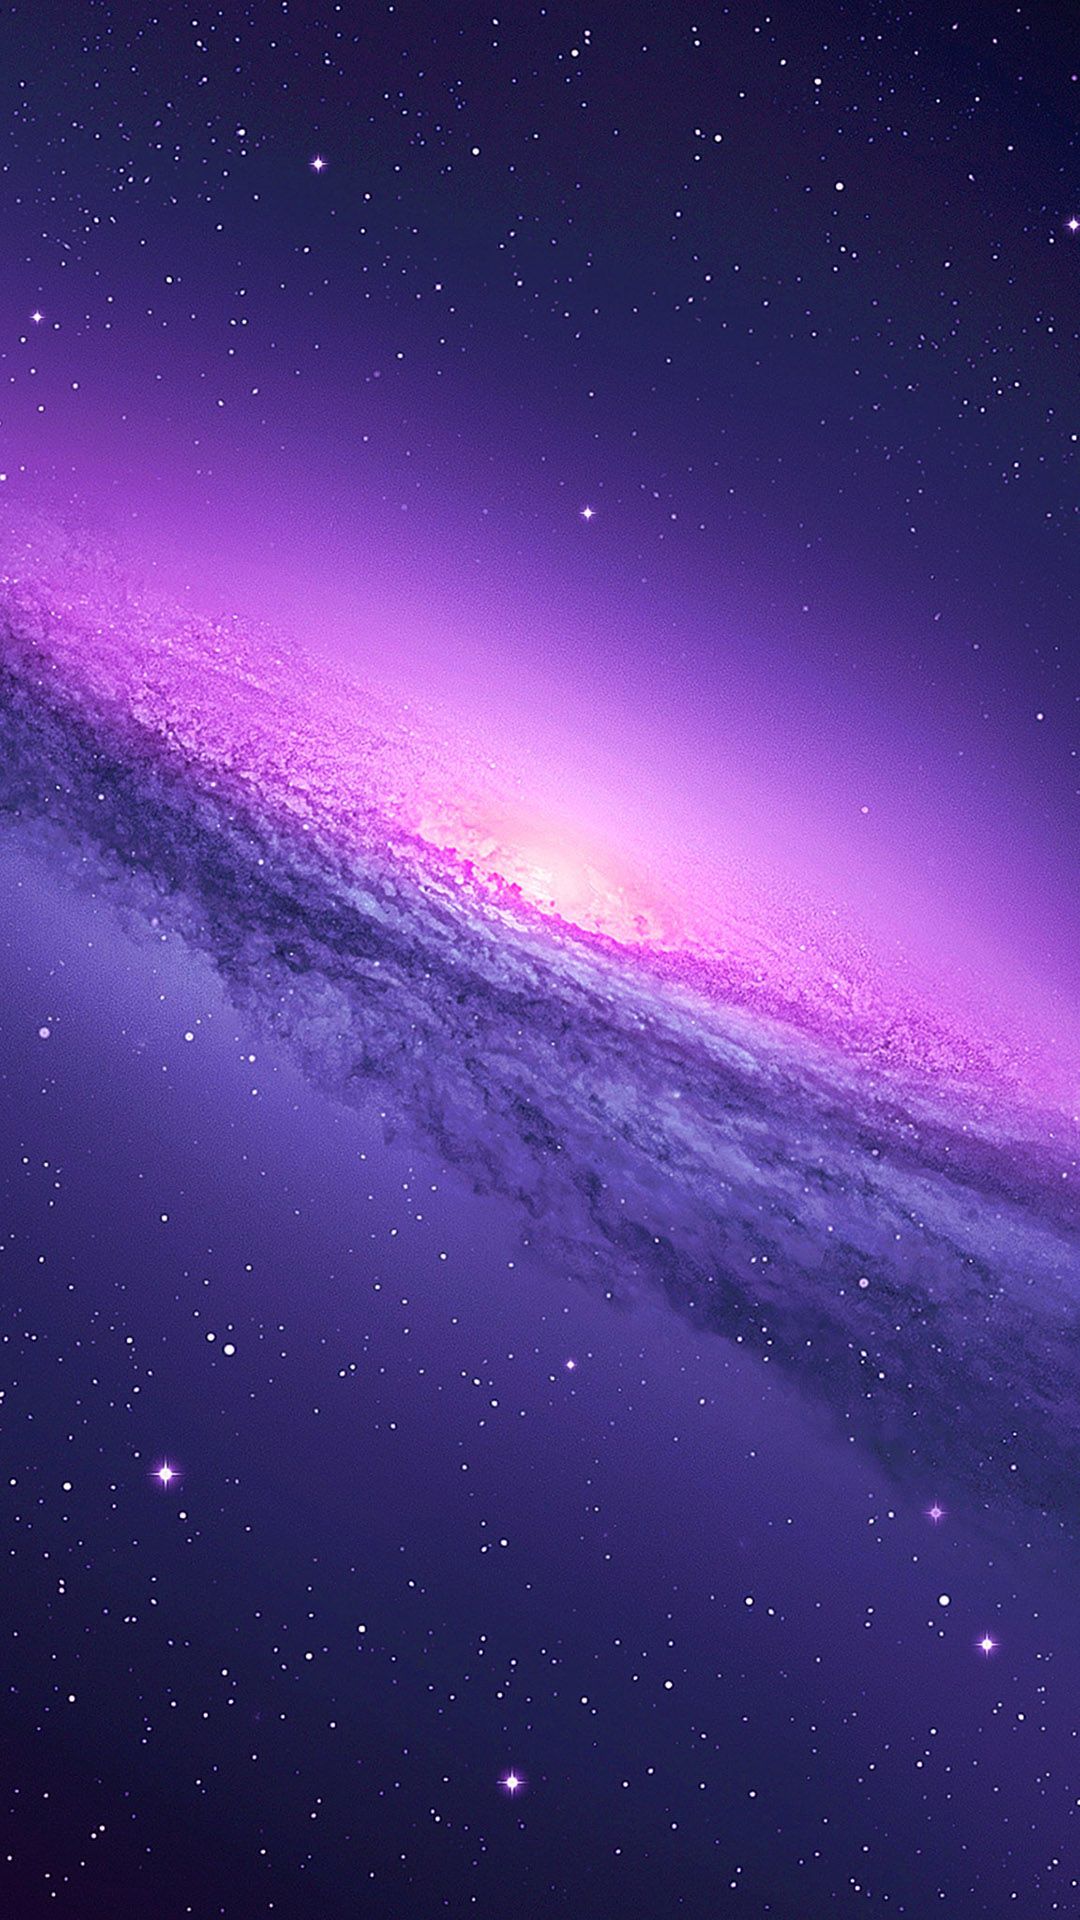 pastel galaxy background